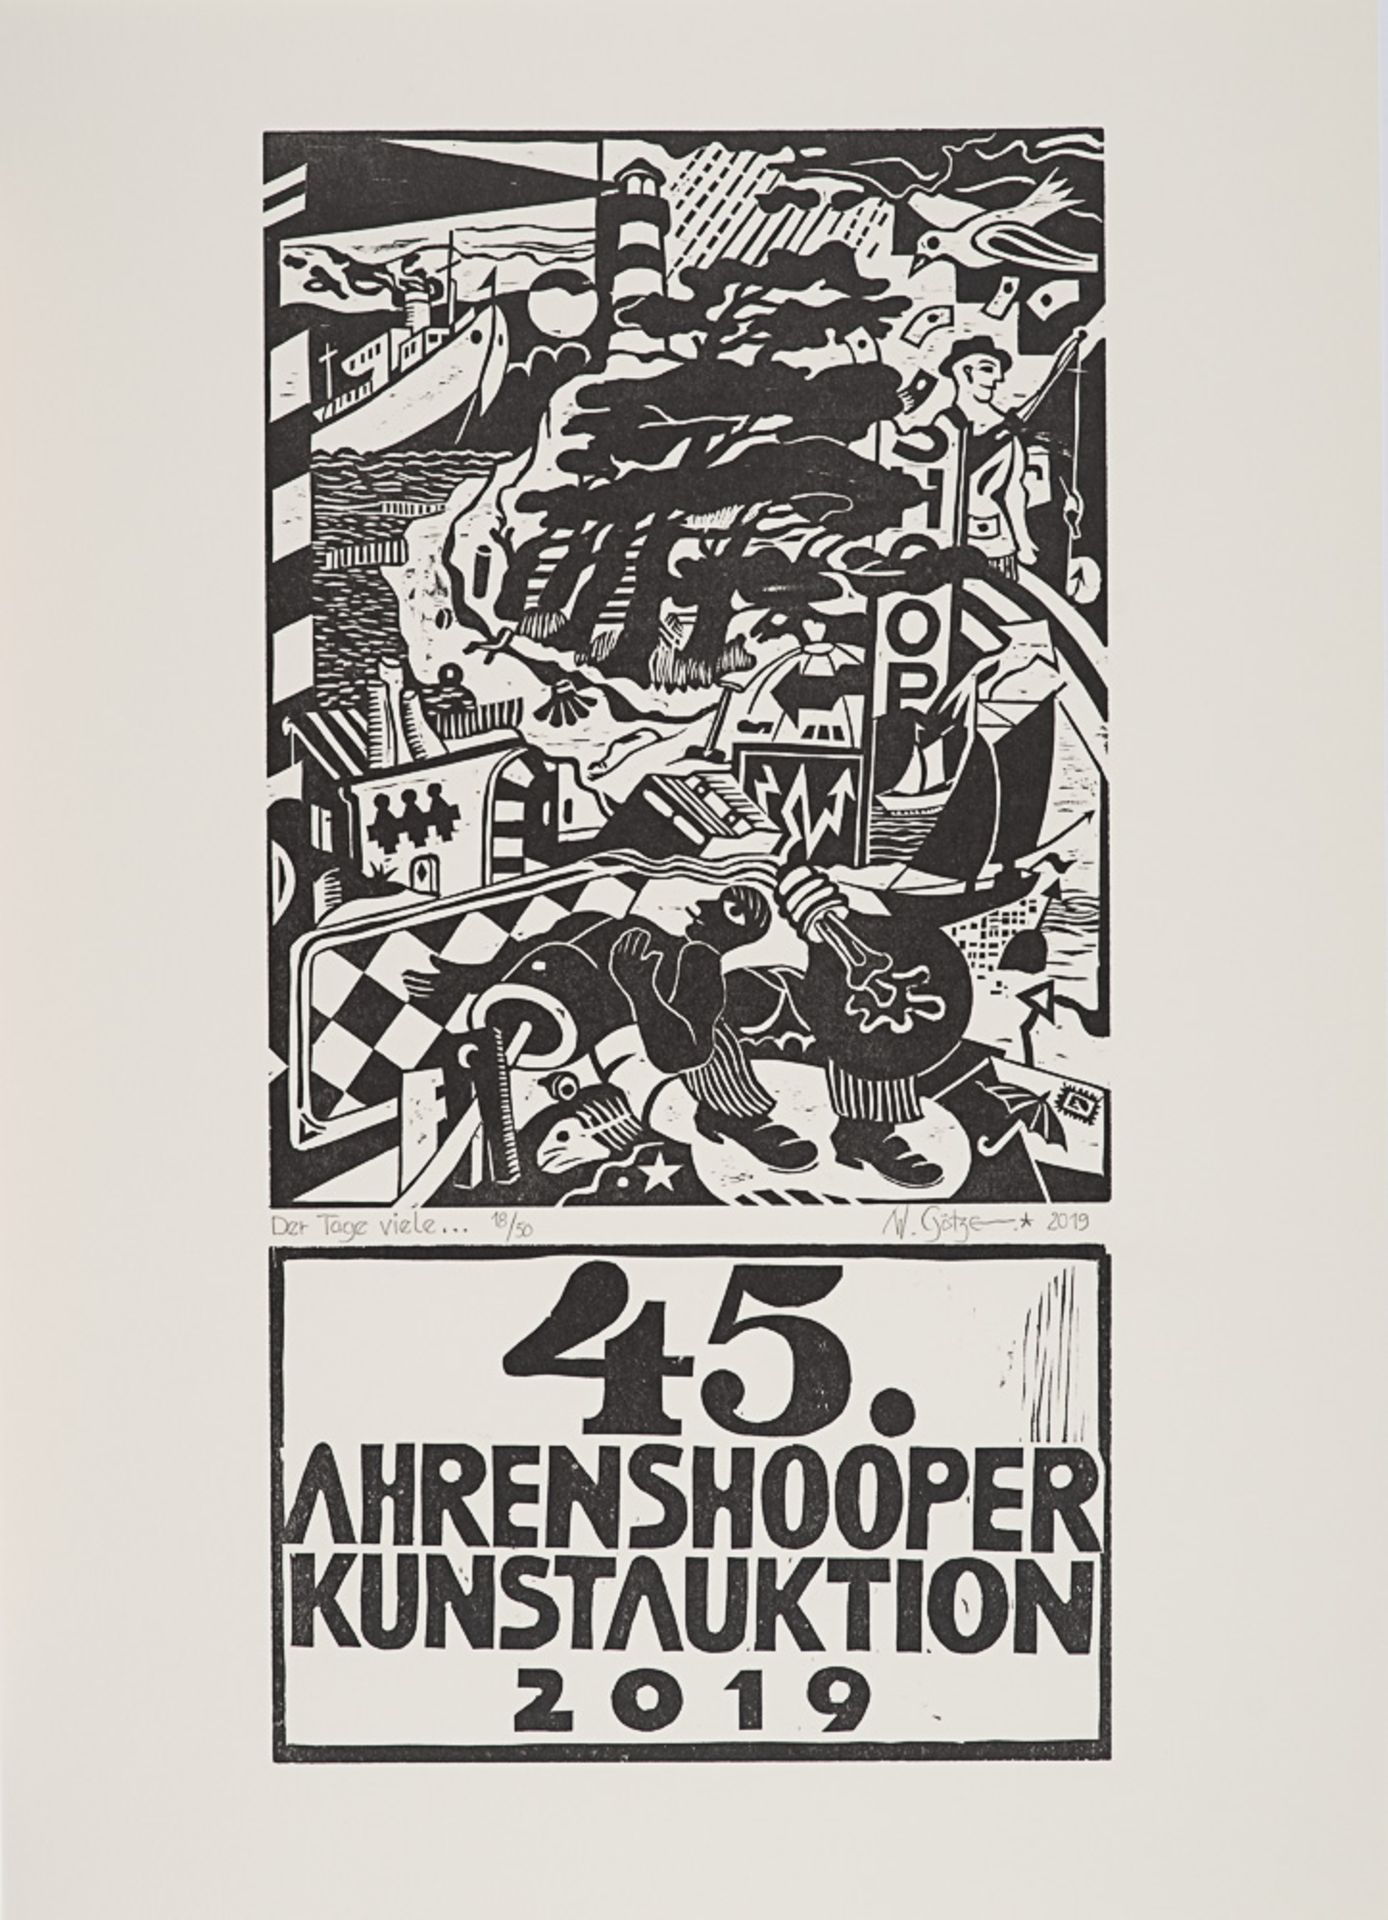 Wasja Götze – Plakat zur 45. Ahrenshooper Kunstauktion, Künstlerplakat, 2019.